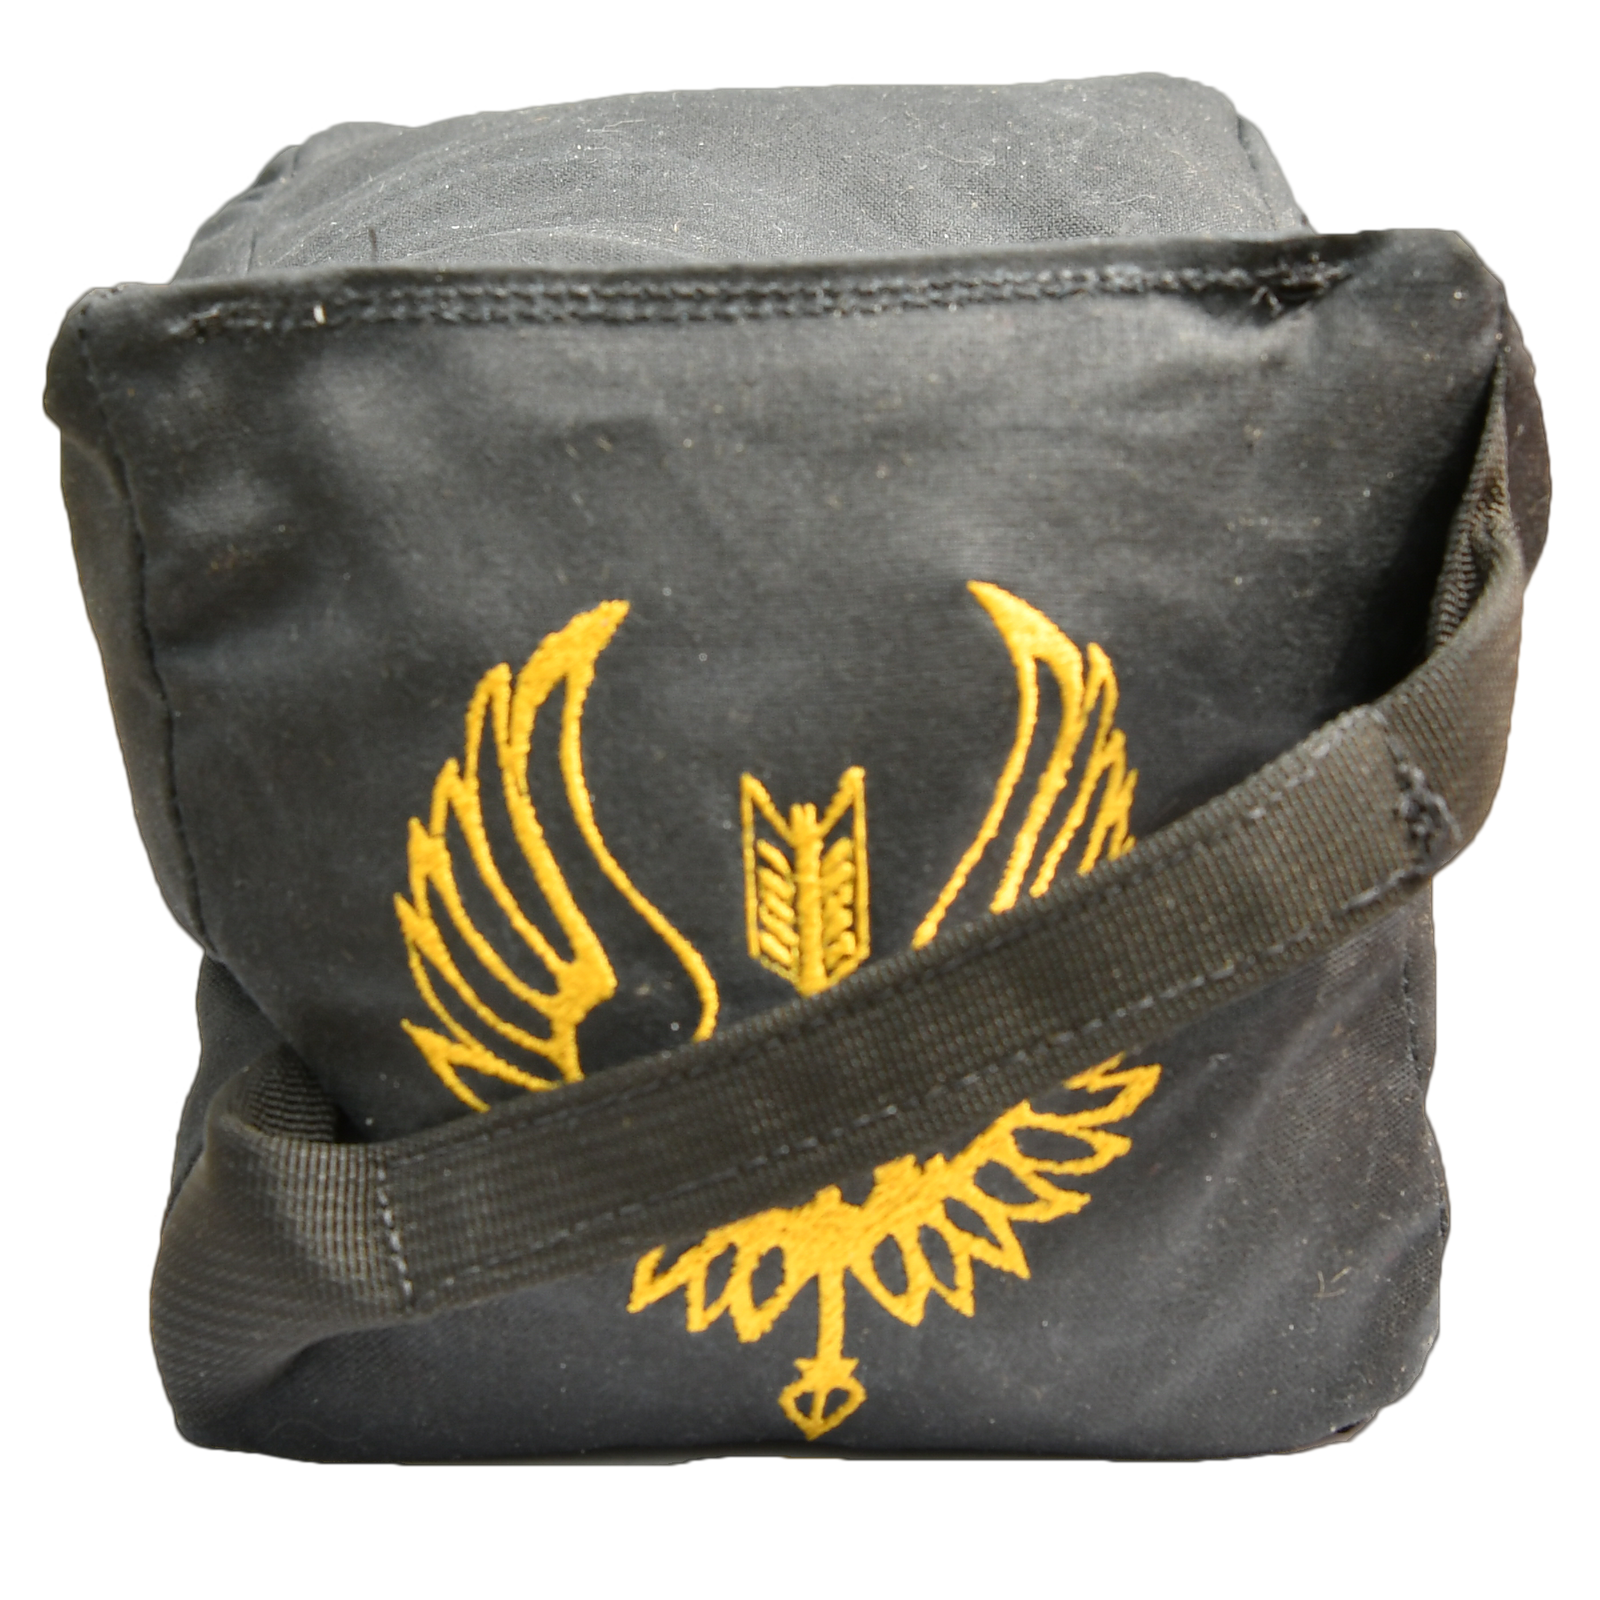 APA Limited Edition Shmedium Sized Game Changer Bag*